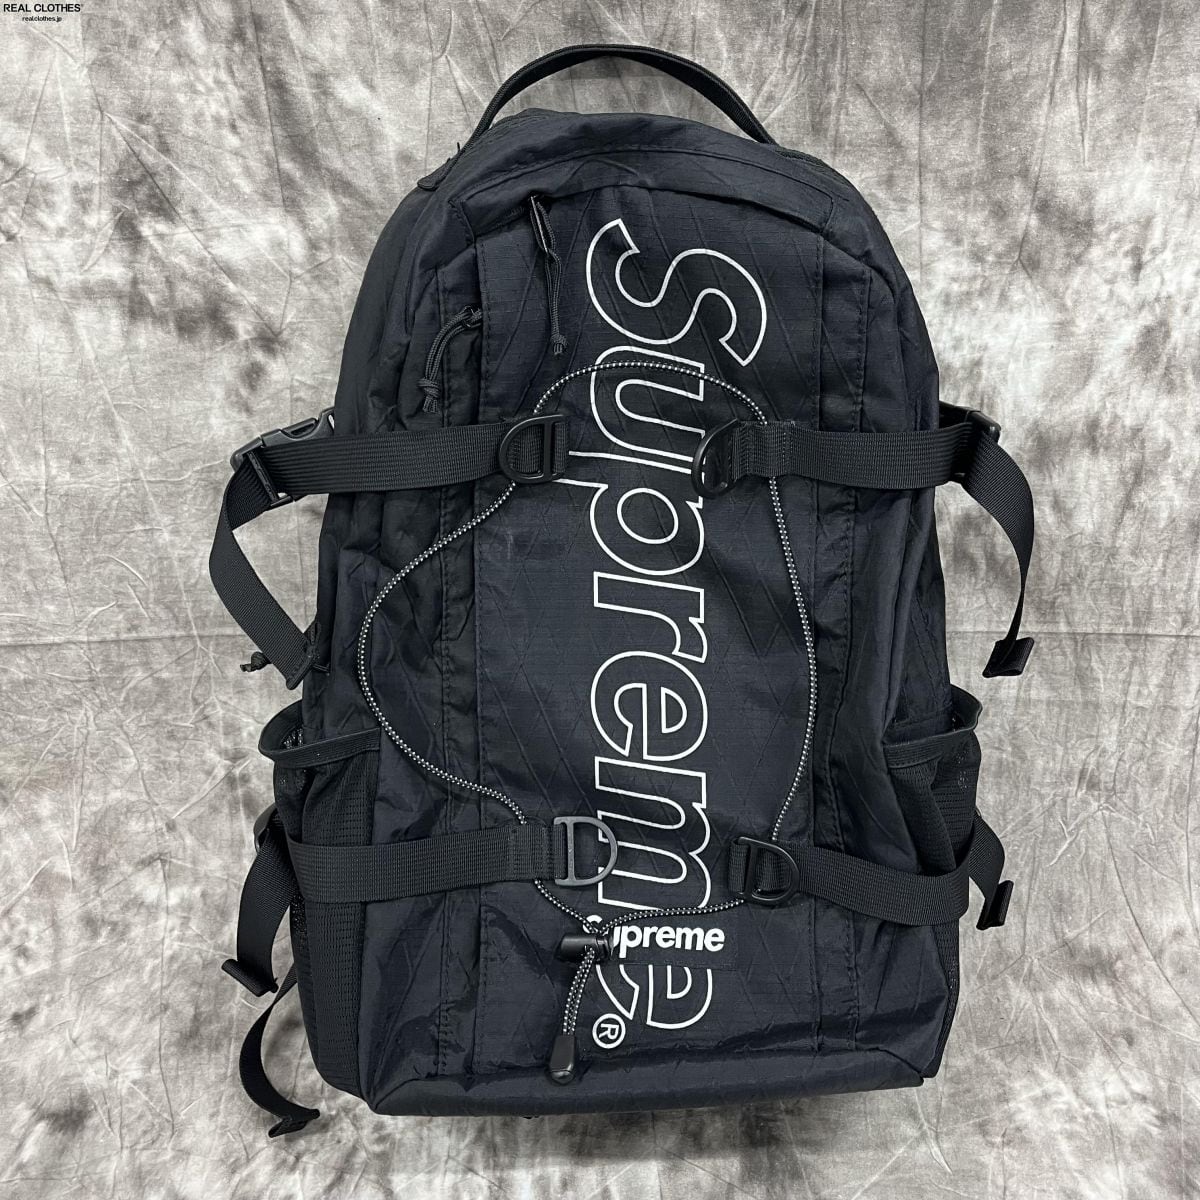 supreme 18aw backpack バックパック ブラック - www.sorbillomenu.com